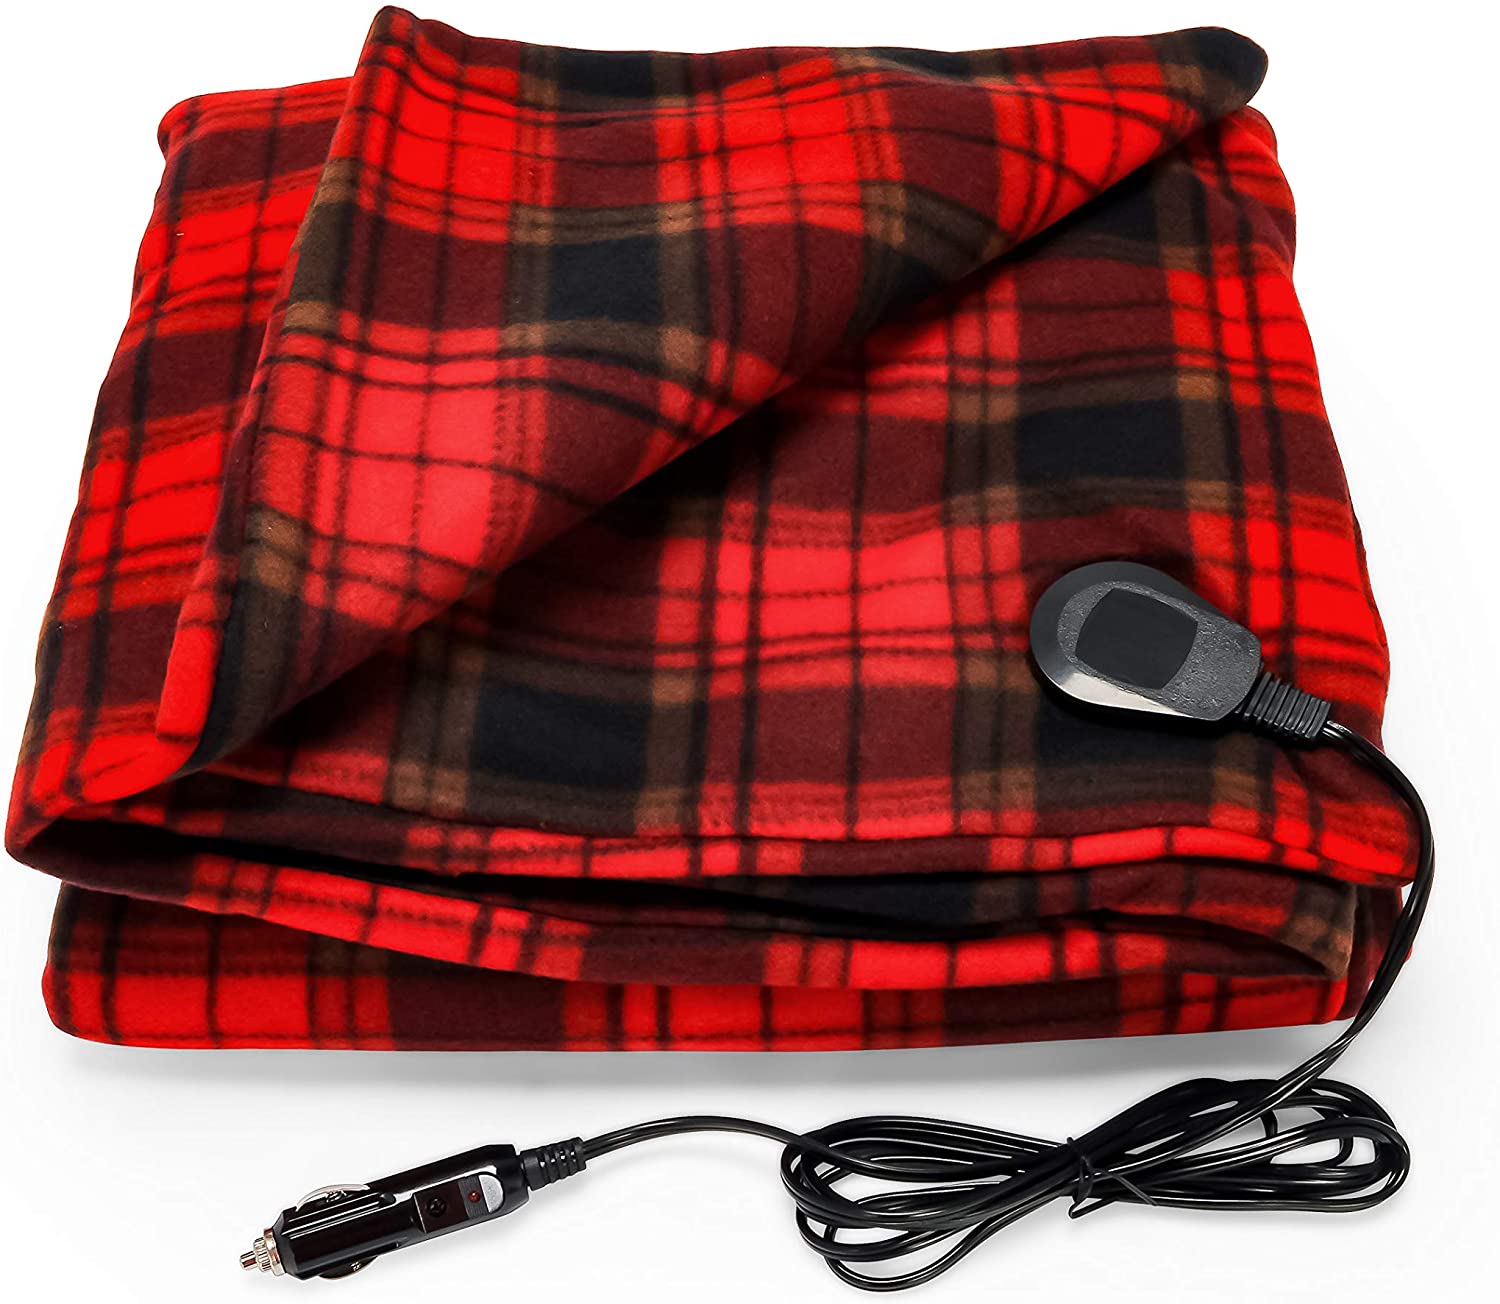 heated car blanket